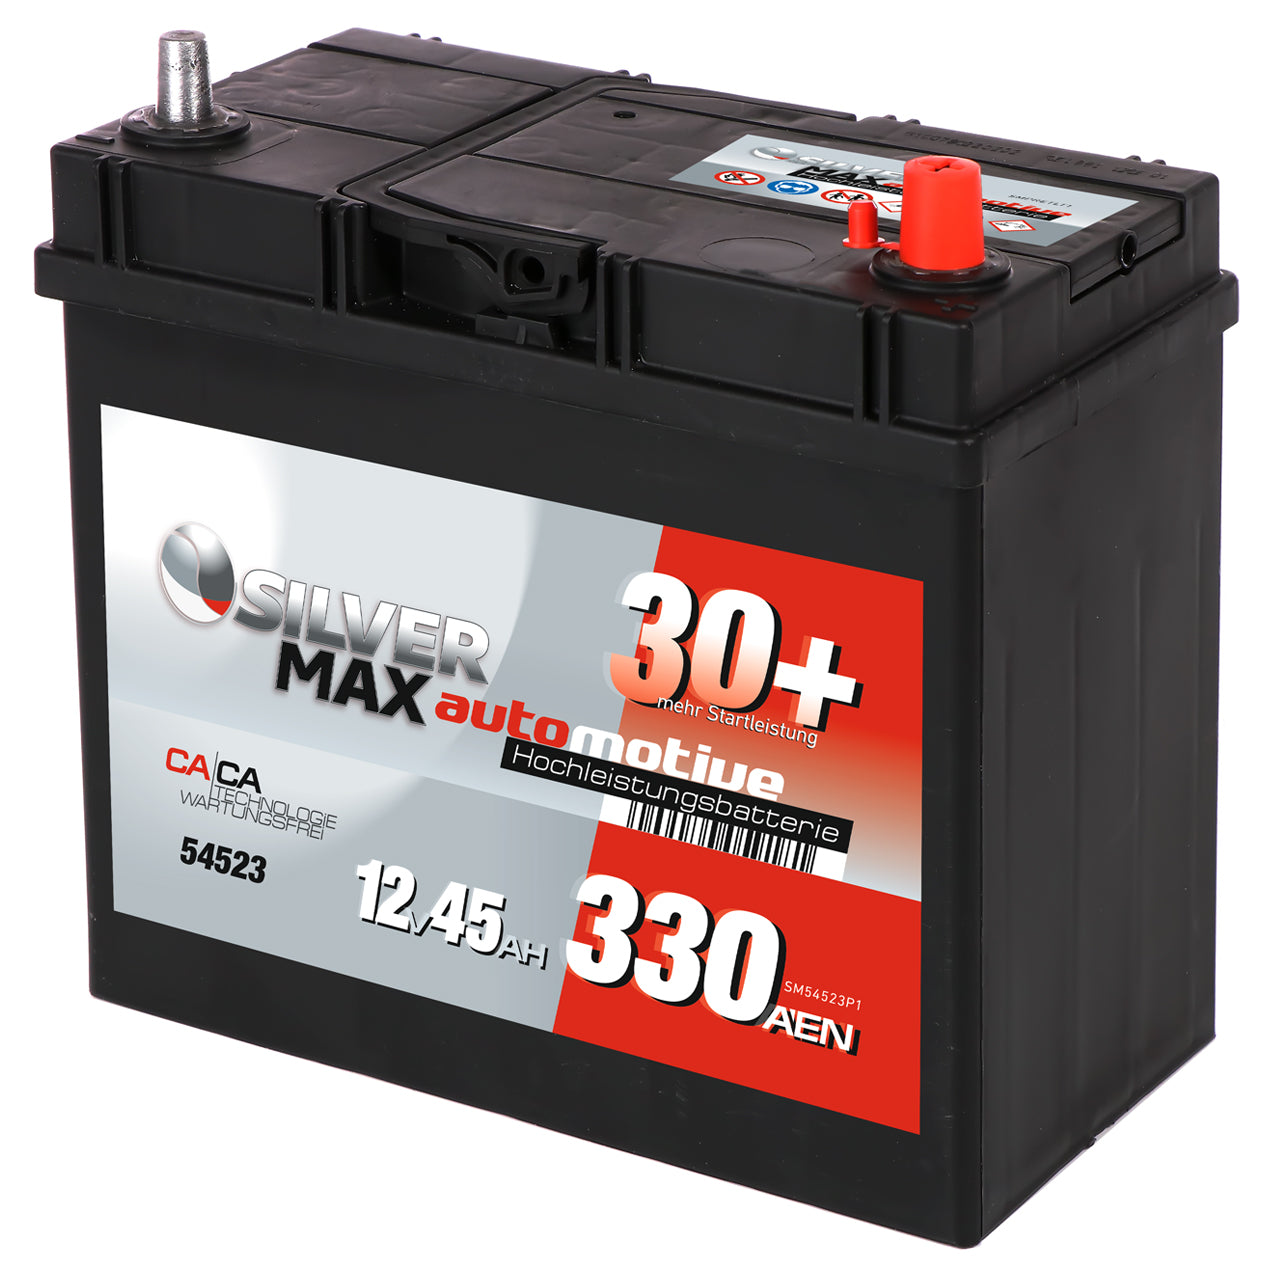 Batterie 12v-45ah/330a ns60 + a gauche Techni-Power